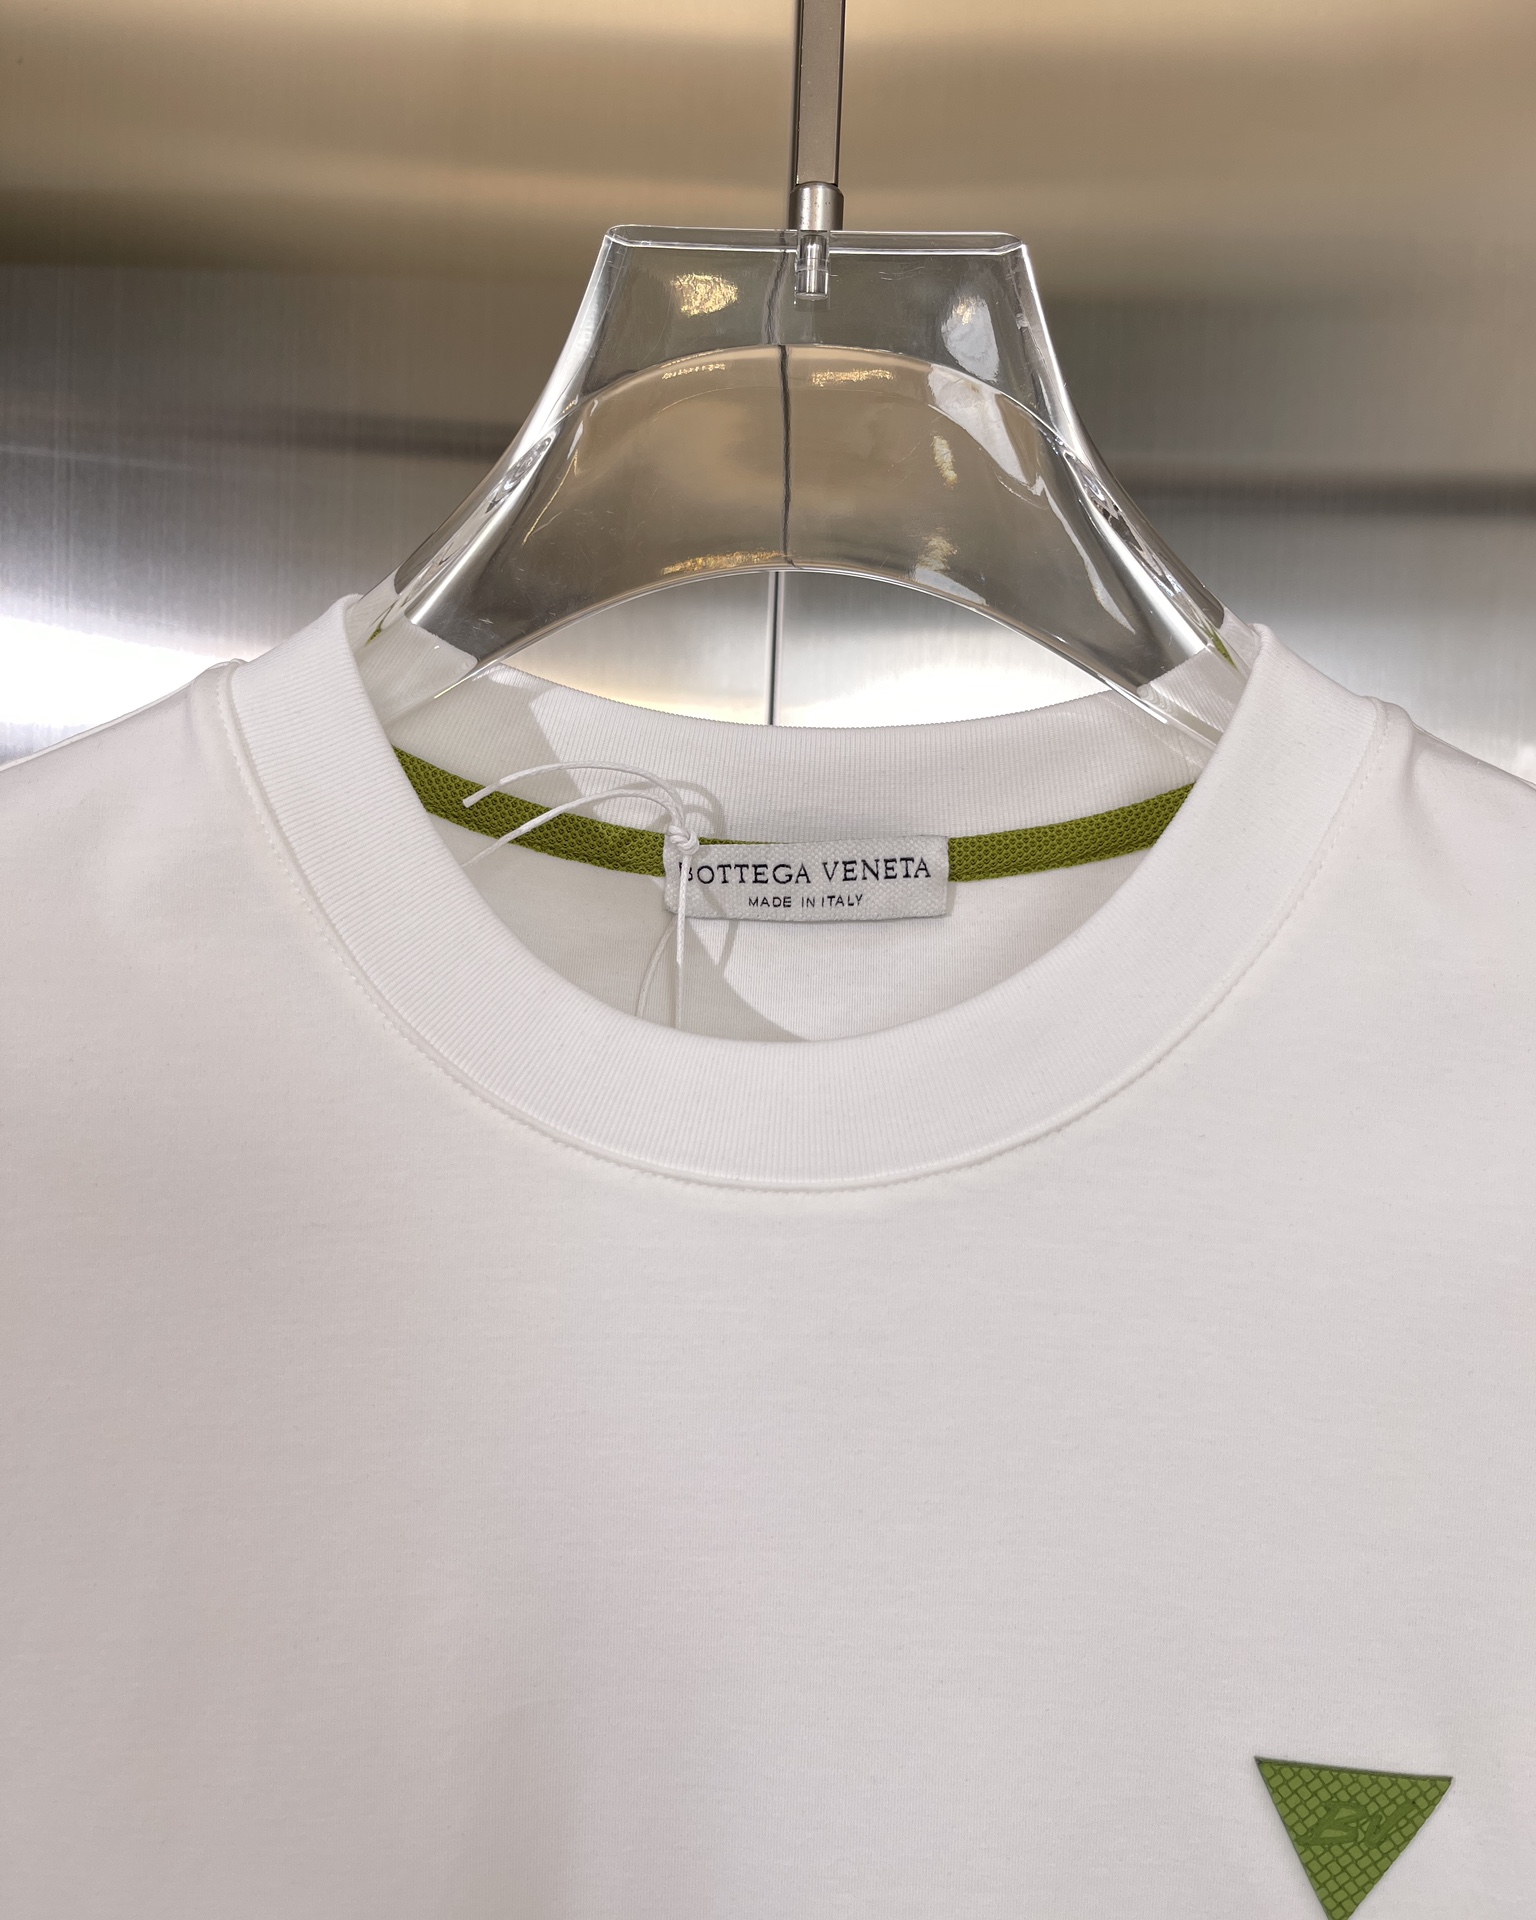 Bottegaveneta保蝶家BV款式男款短袖T恤衫T-shirt100支双移圈提花面料全套丝光针数是